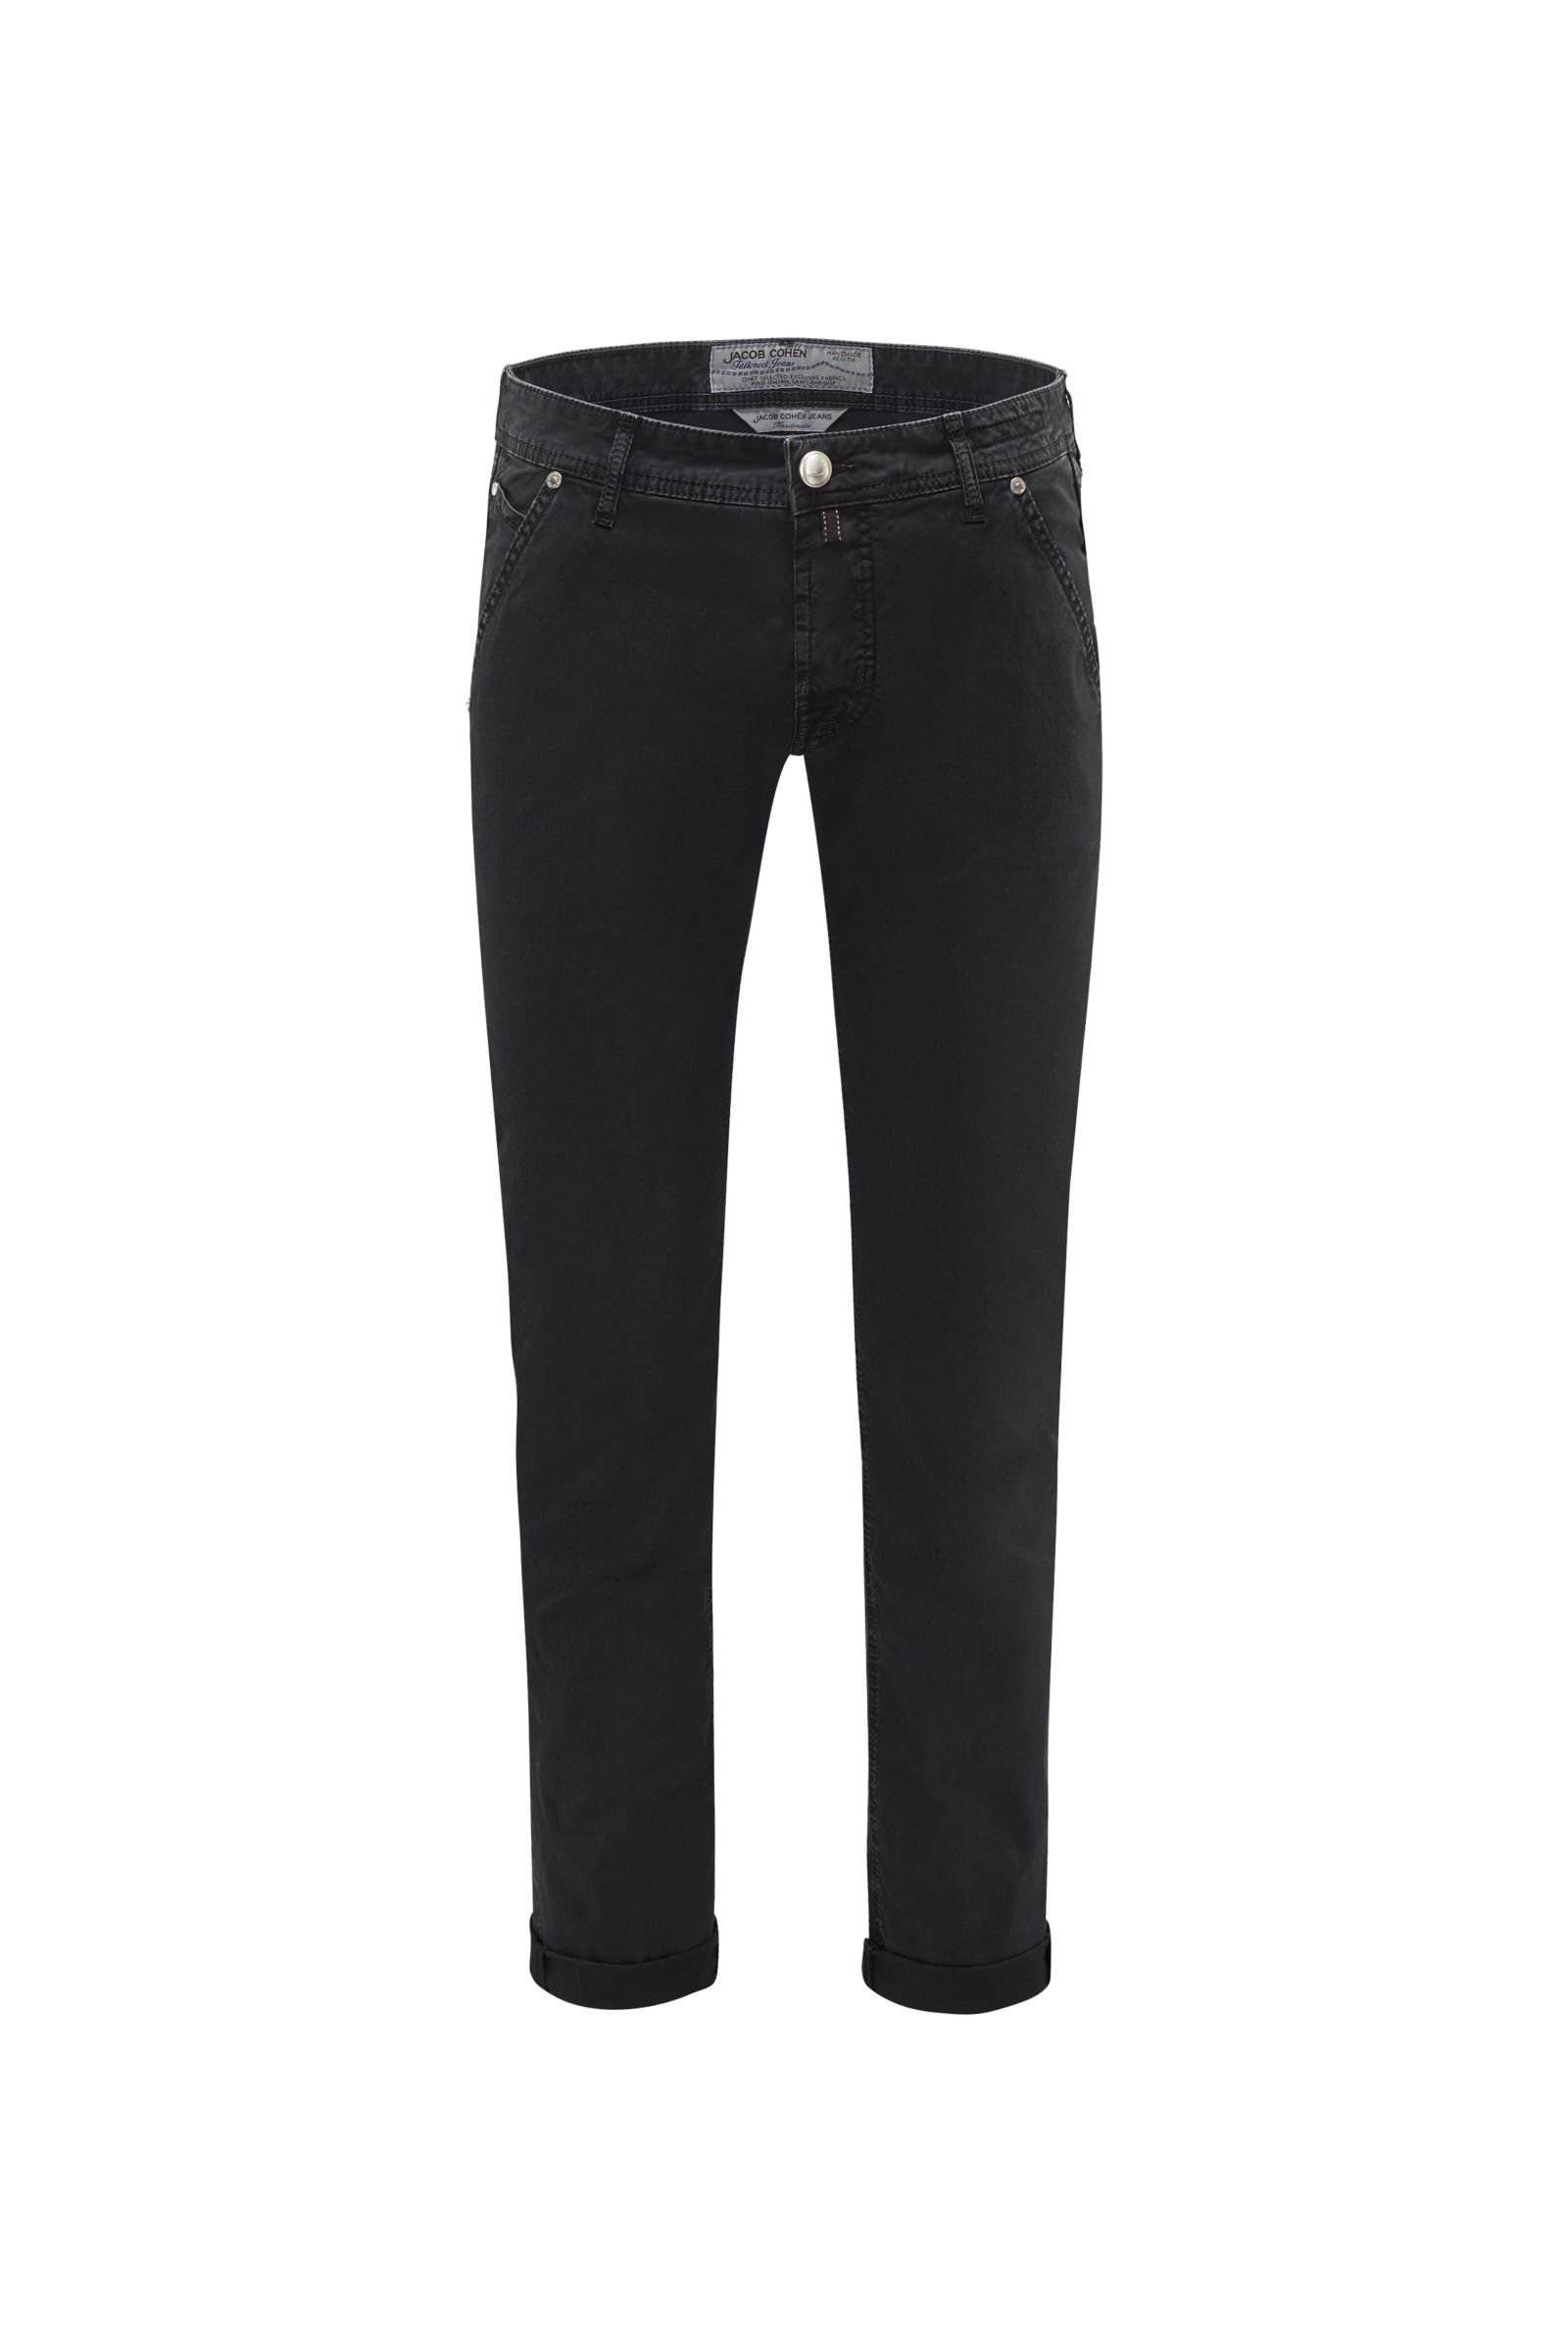 Cotton trousers 'PW613 Comfort slim fit' black